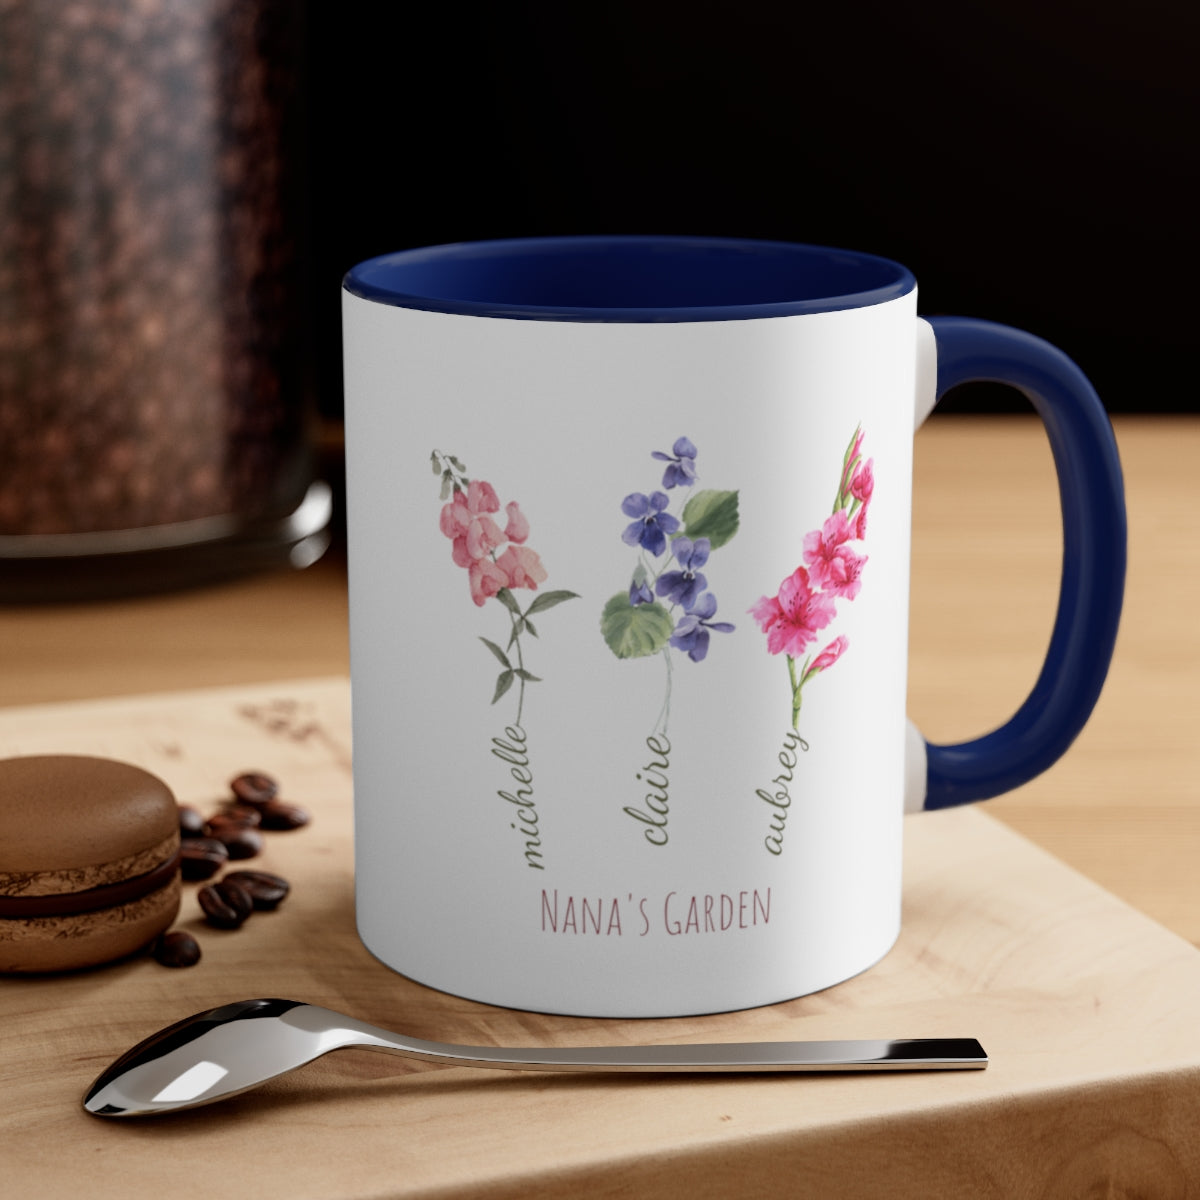 Grandma's Garden Birth Flower Mug, Personalized Gift for Grandma,  Family Birth Flower Bouquet, Grandma's Garden with Grandkids Names